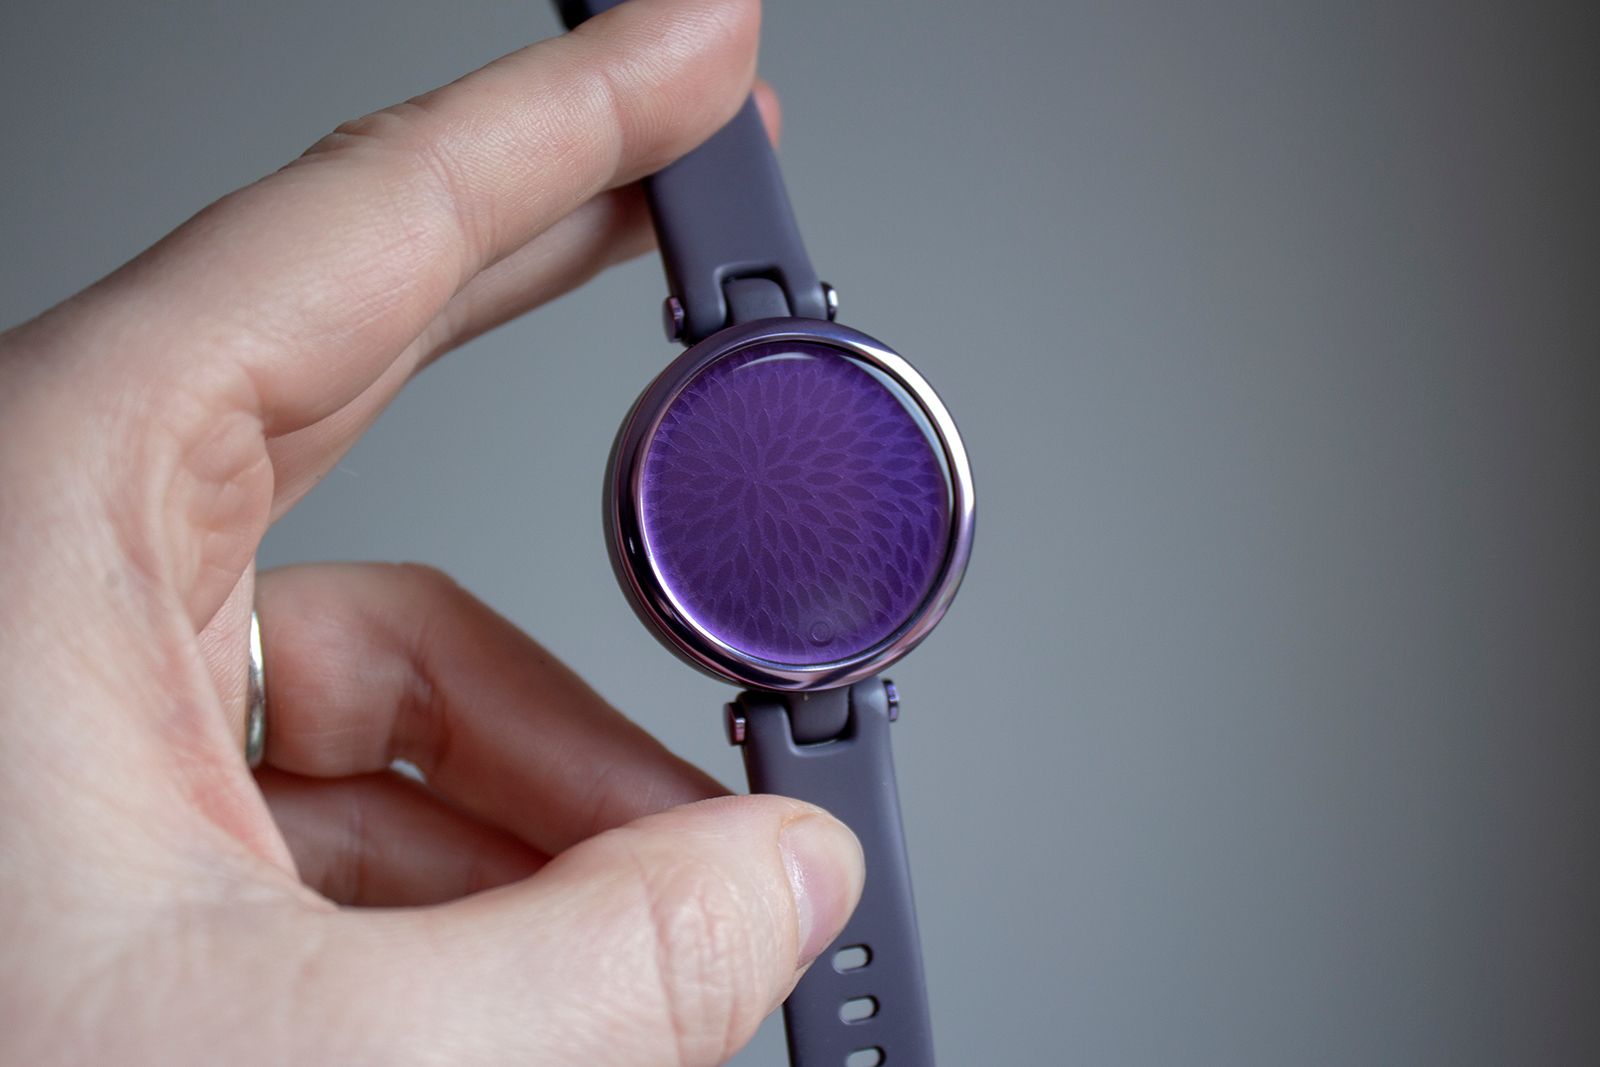 Smartwatch Garmin Lily para mujer